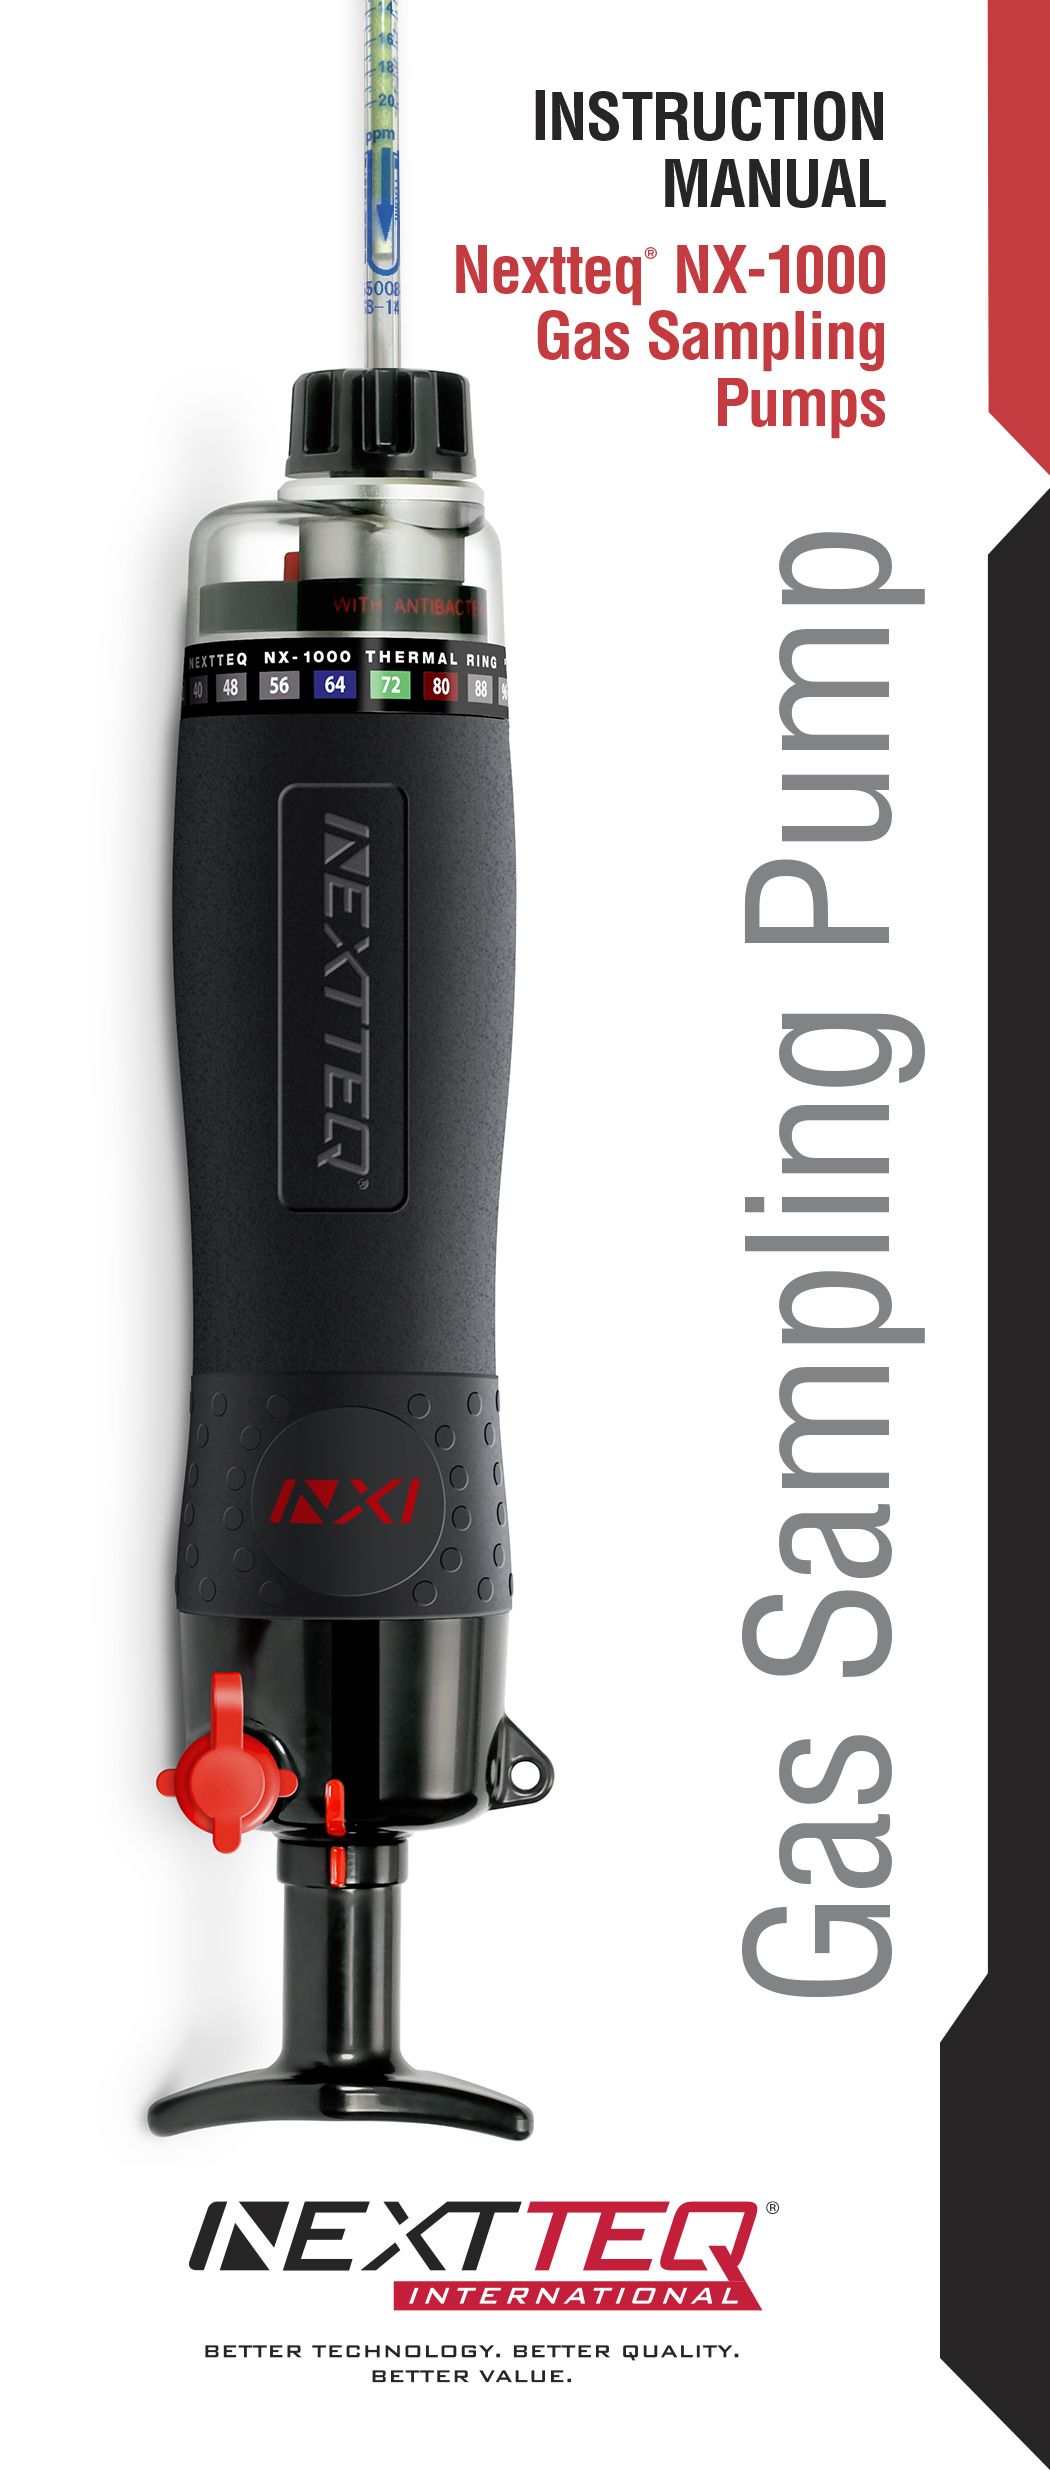 Nextteq® NX-1000 Pump Manual.